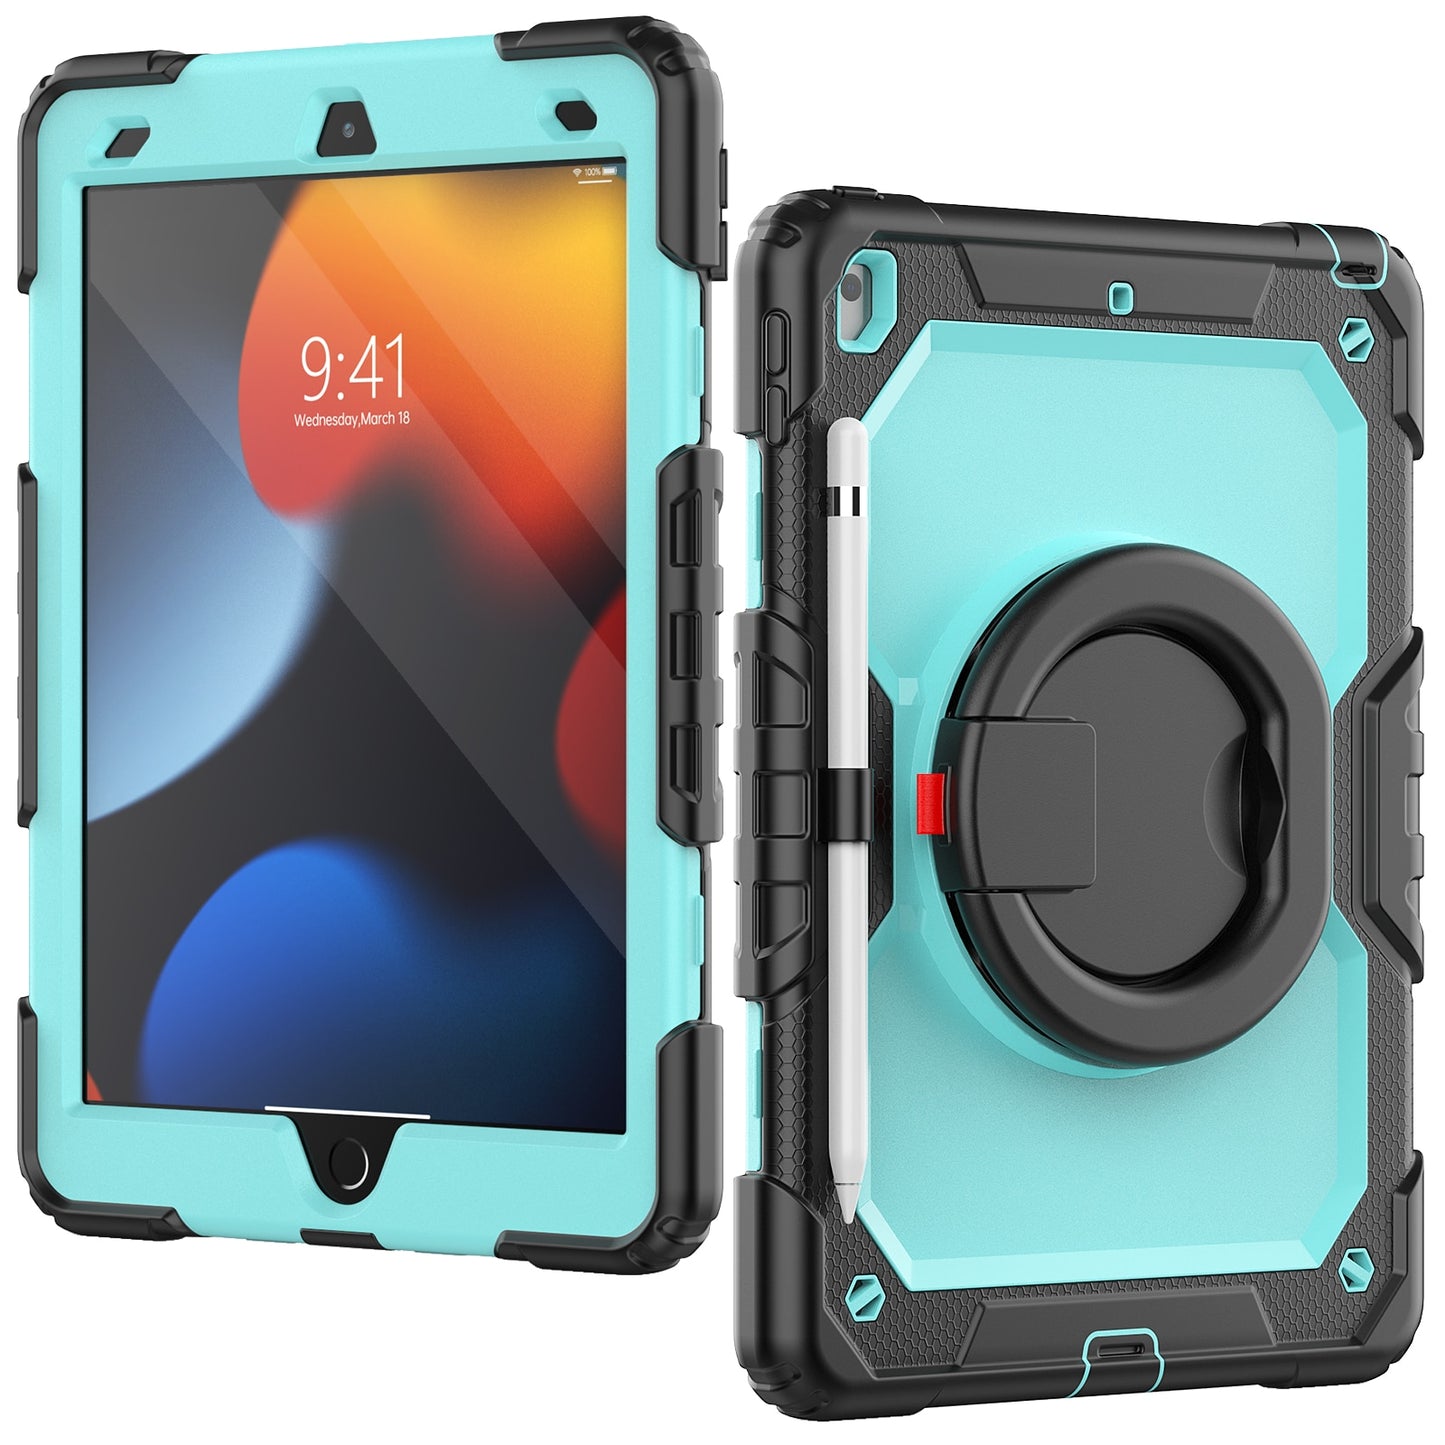 Smart Cover iPad Case Shockproof Design